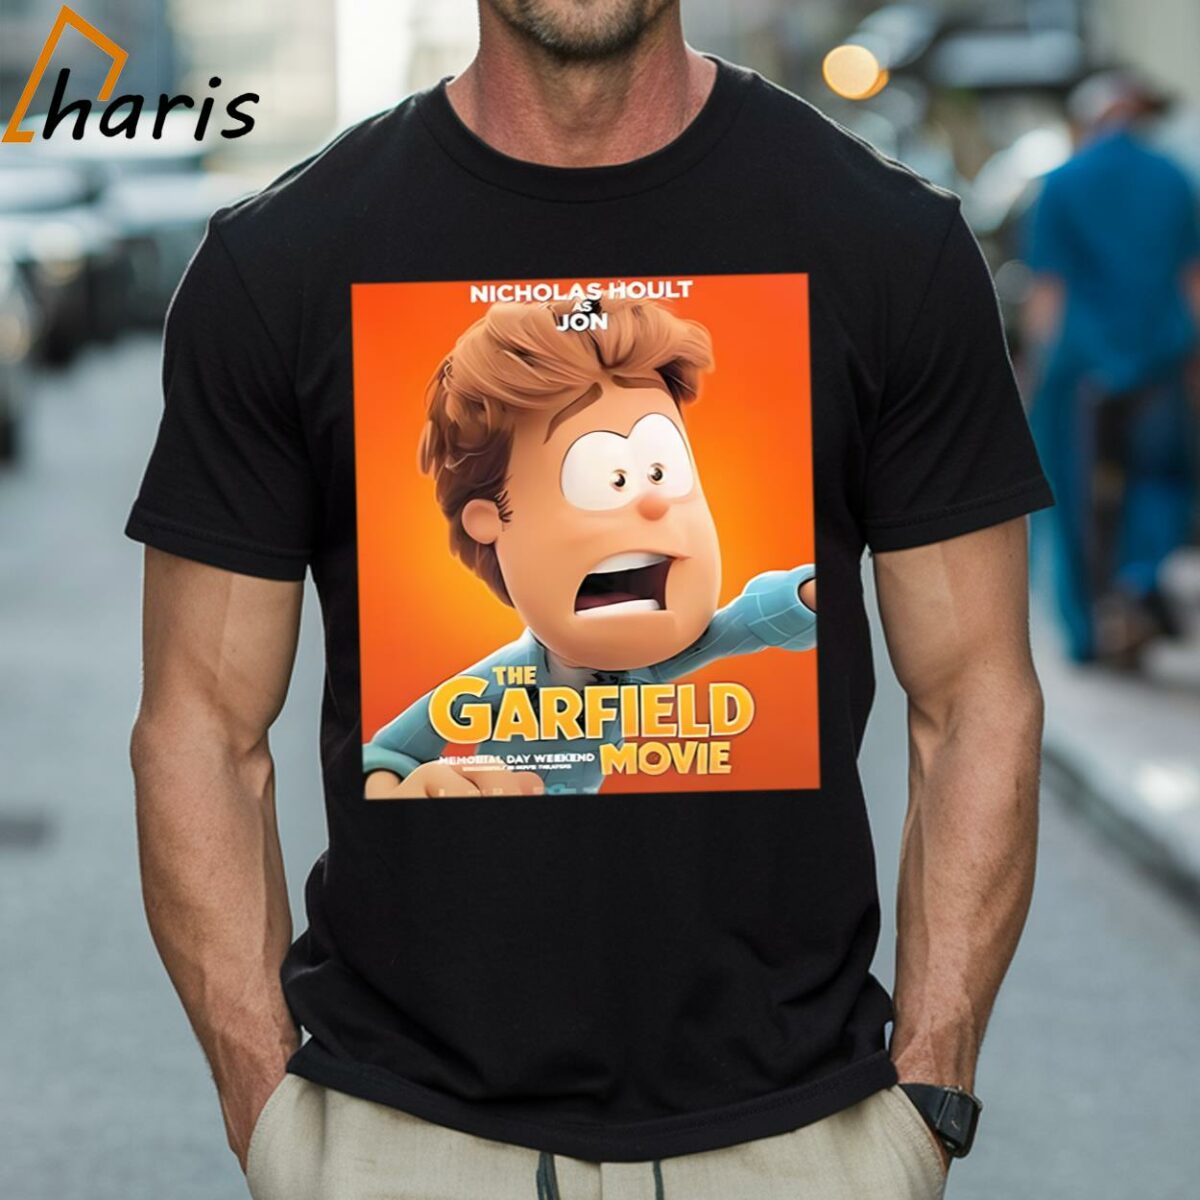 Nicholas Hoult As Jon In The Garfield Movie Shirt 1 Shirt